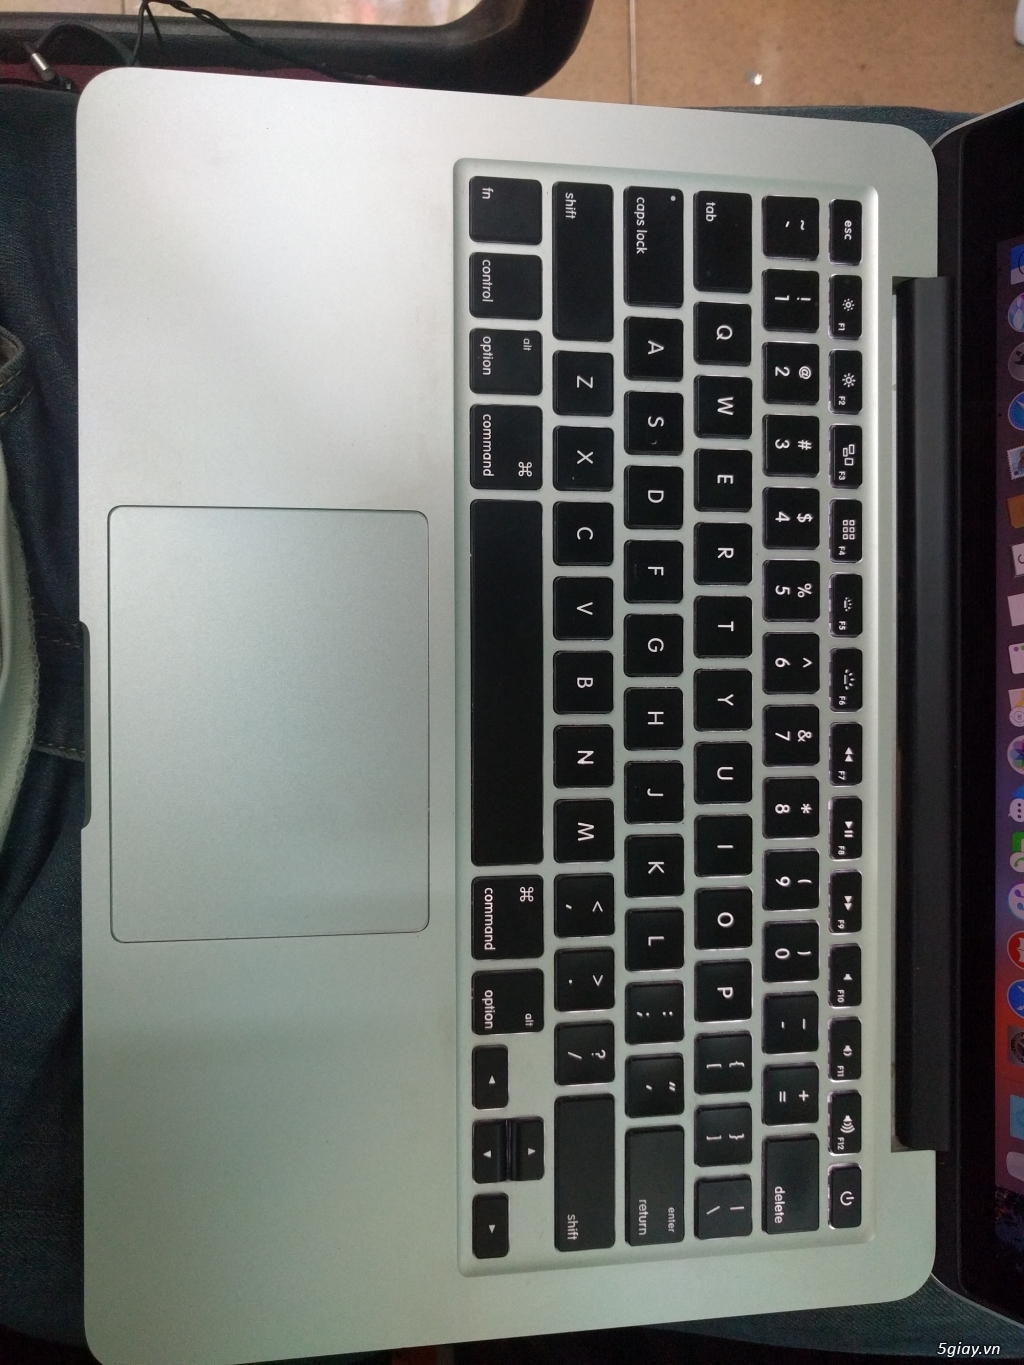 Me865 Macbook Pro 13 2013 I7,16GB,256GB - 4